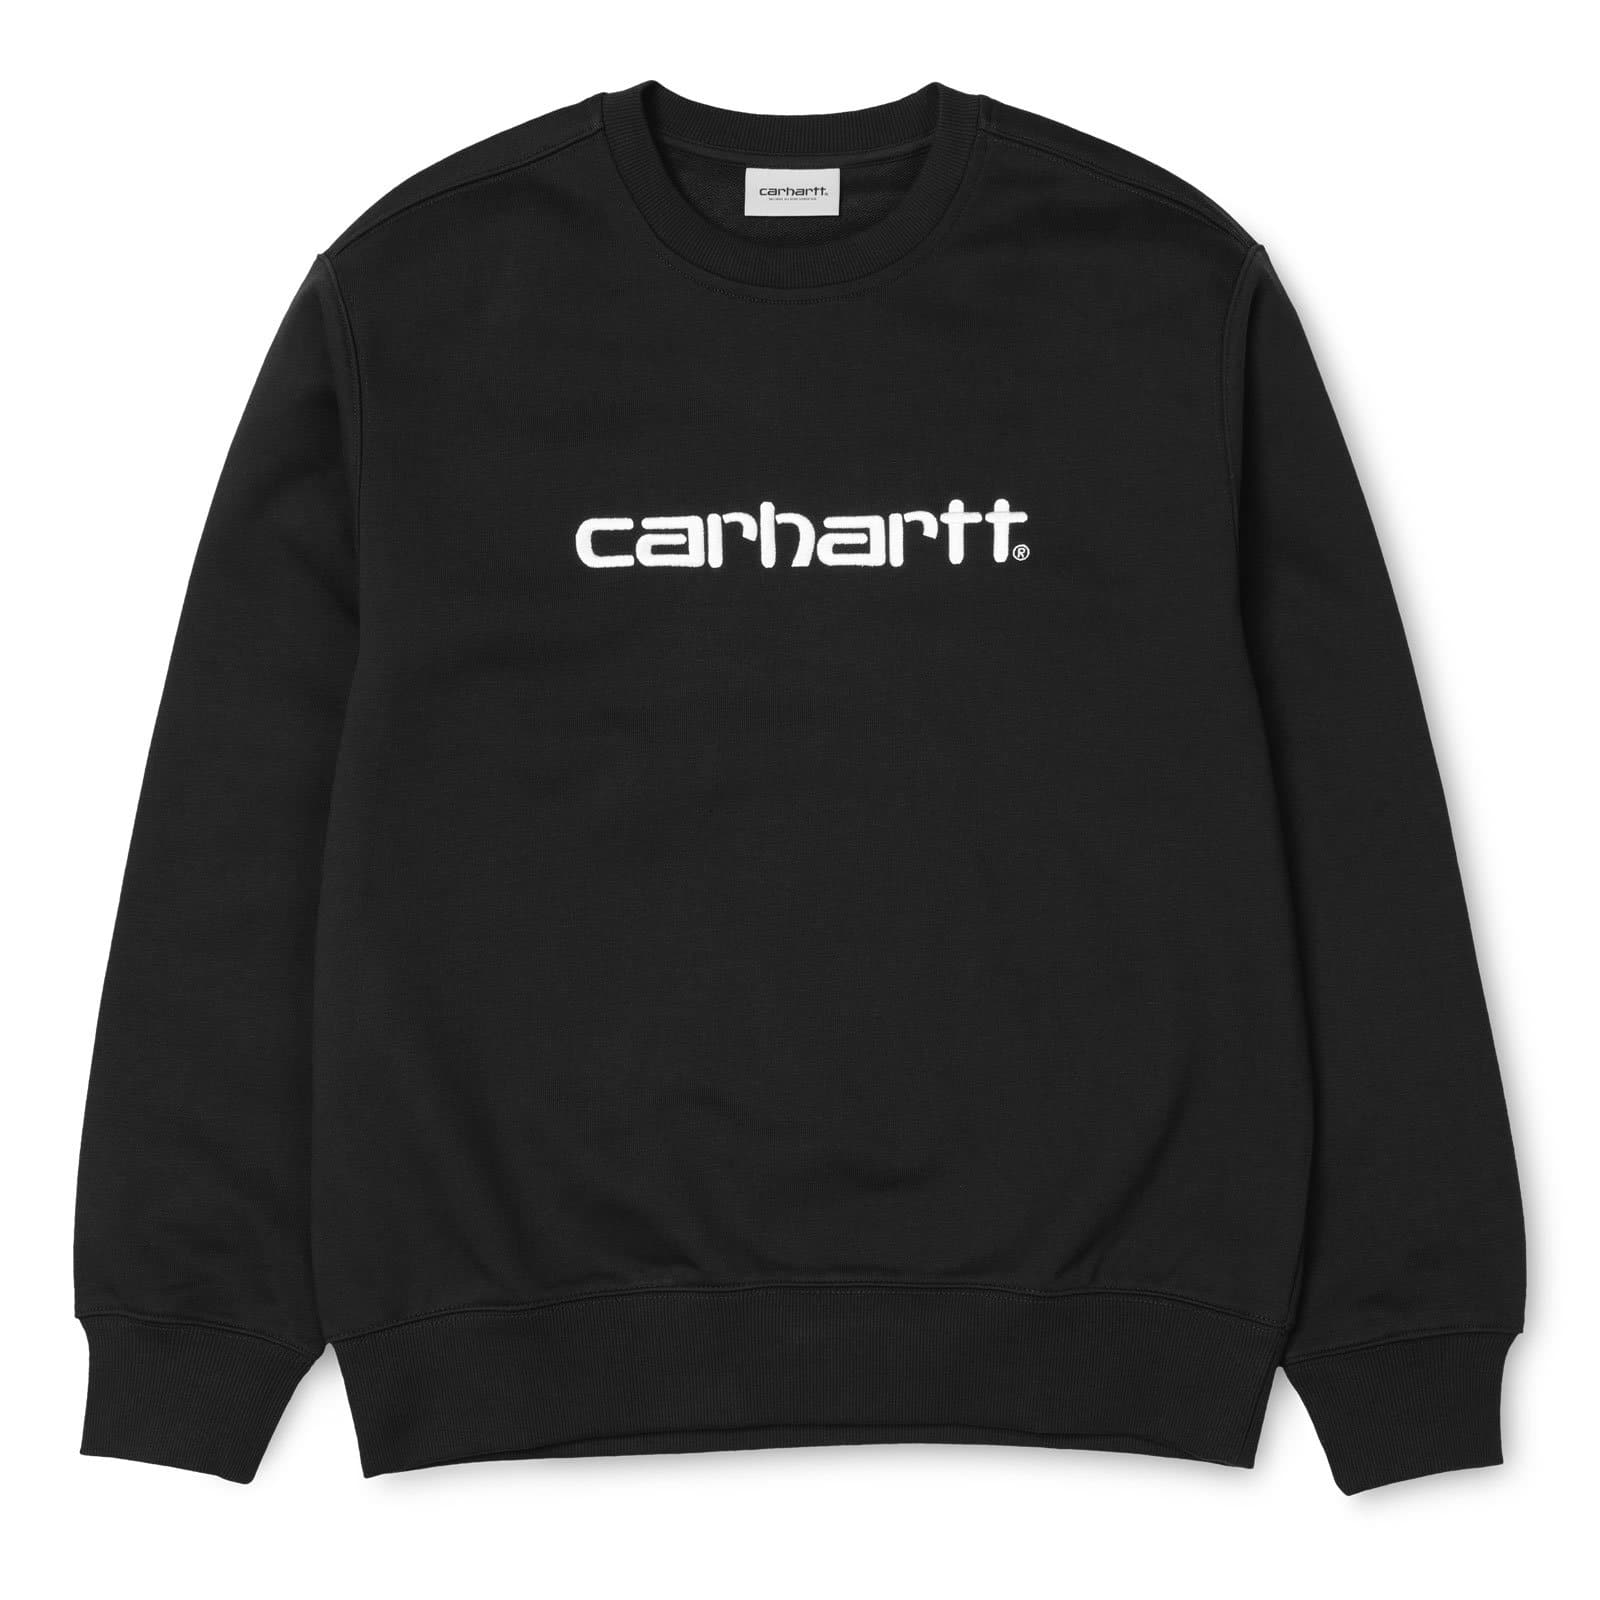 Carhartt WIP Carhartt Sweat Black/White Front